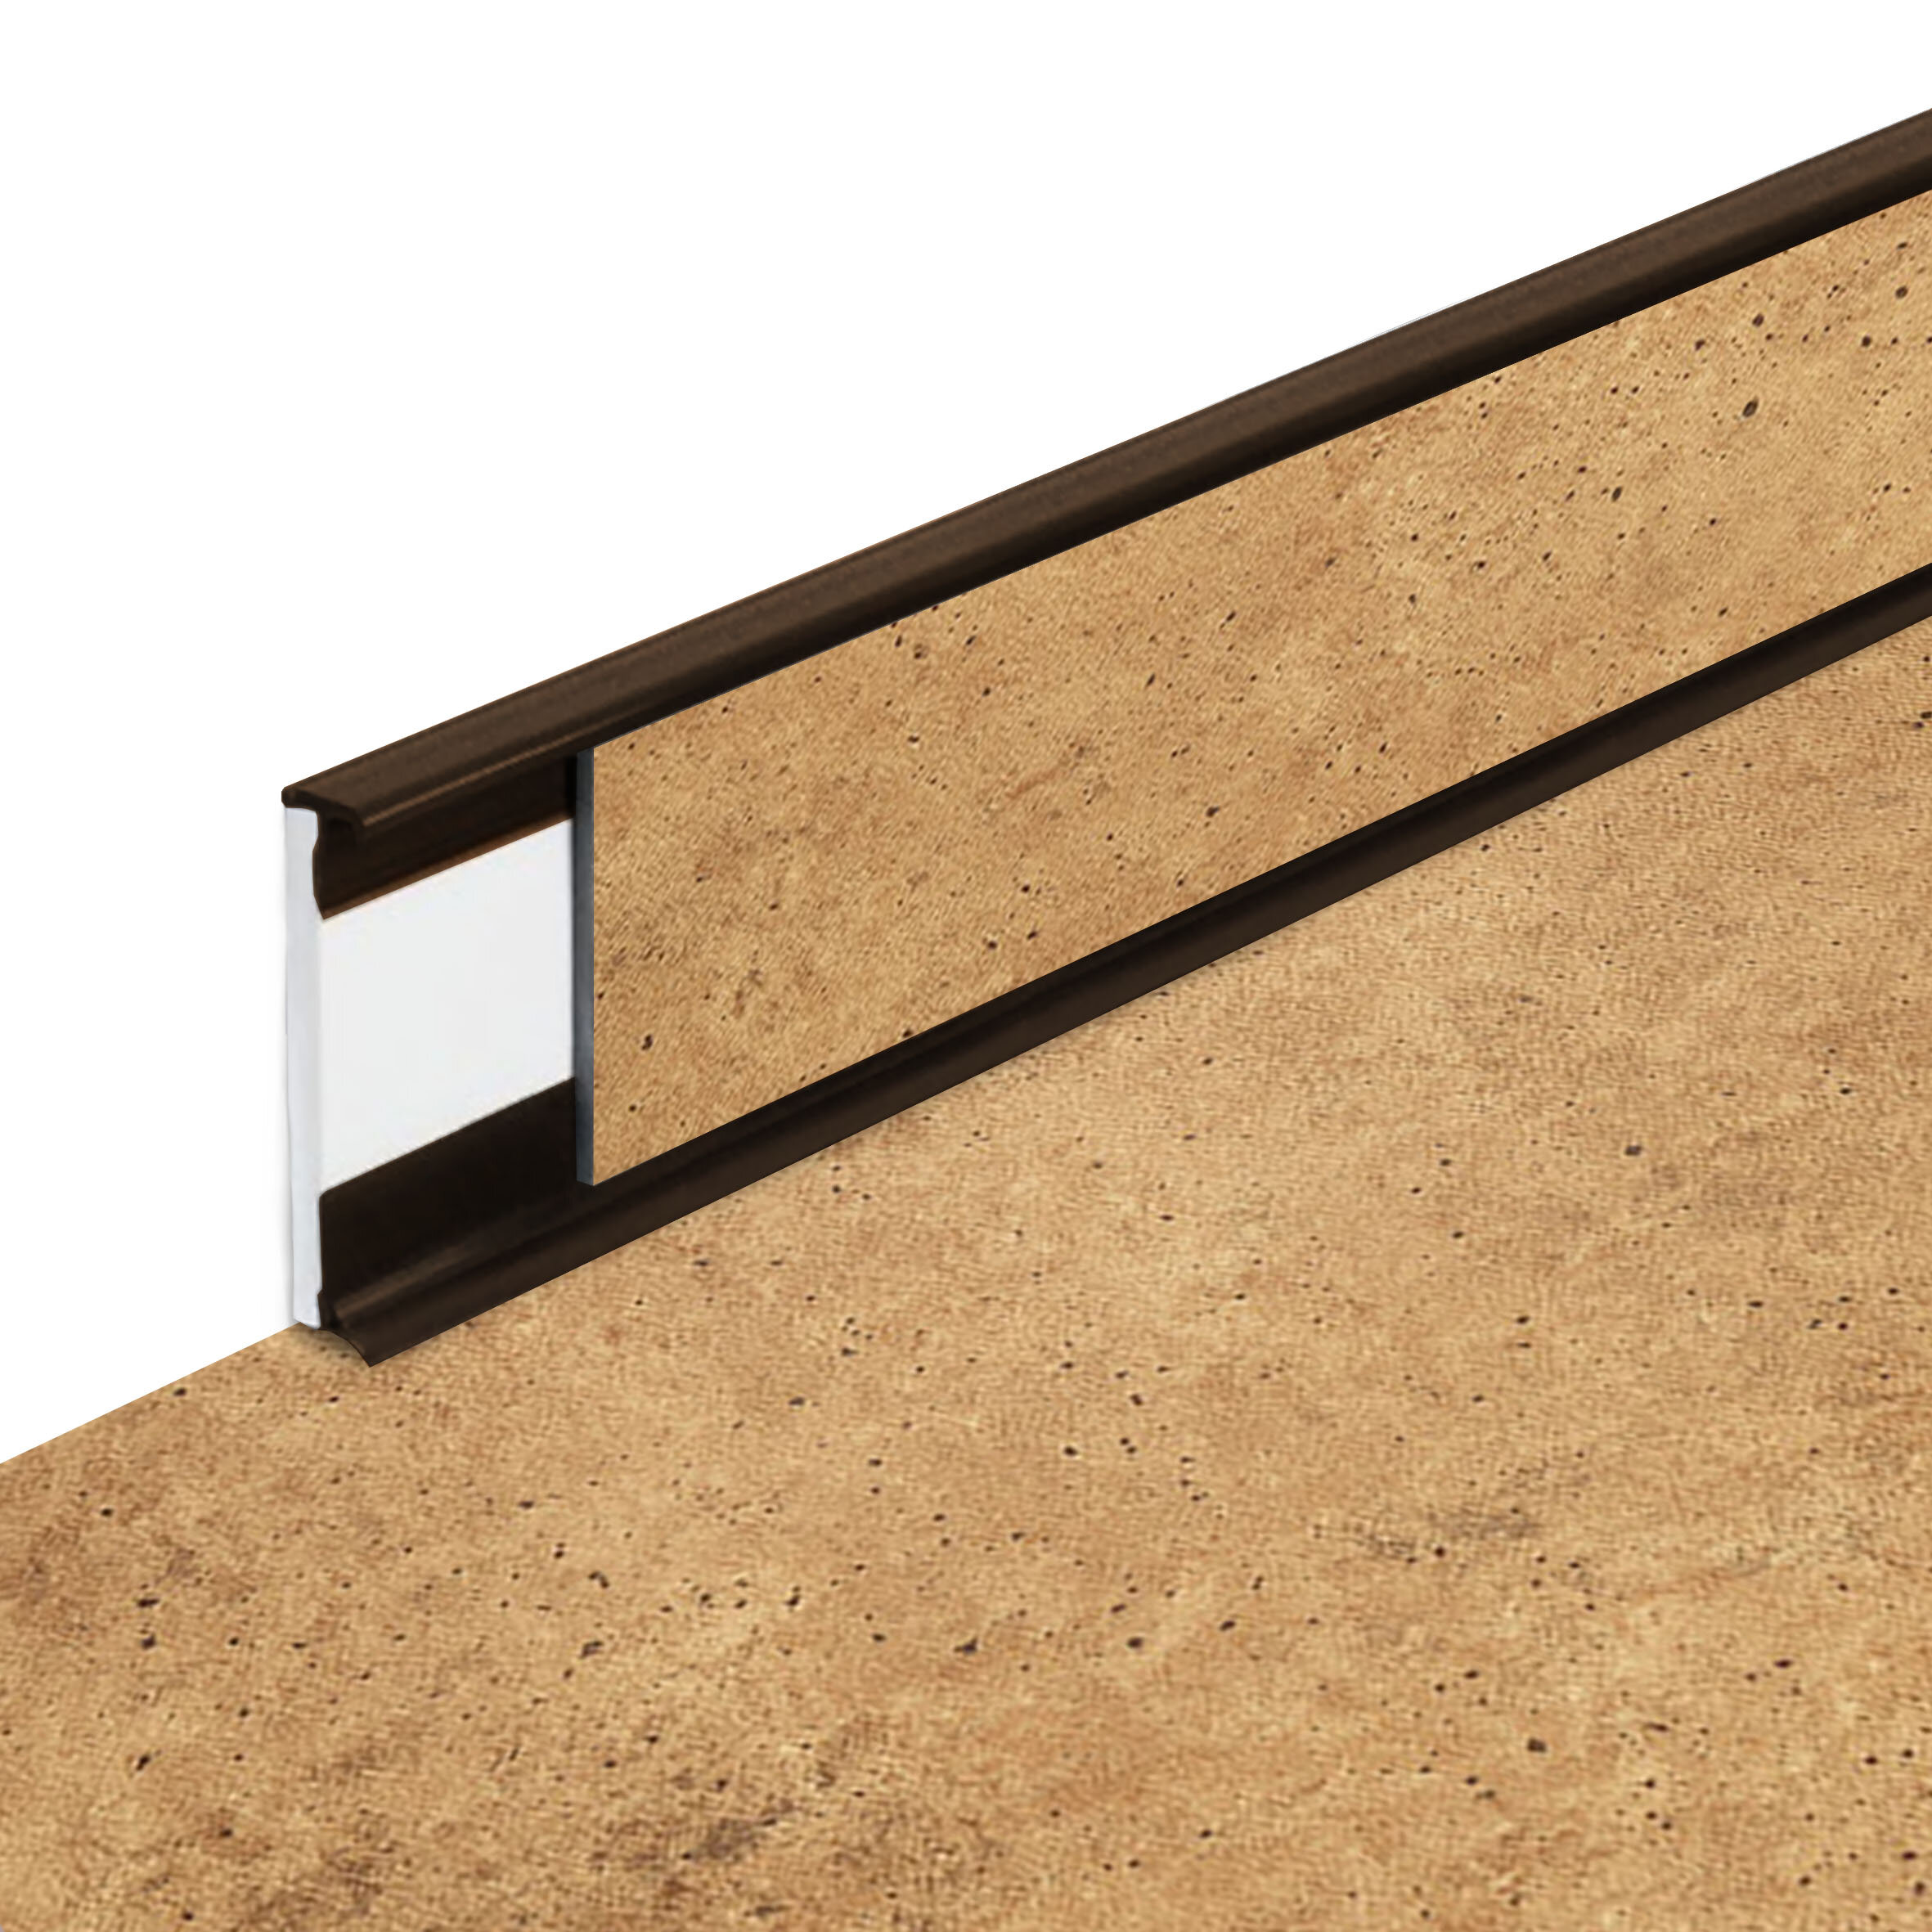 PVC vinylová soklová podlahová lišta Fortelock Business Tornes Mars C006 Brown - délka 200 cm, výška 5,8 cm, tloušťka 1,2 cm